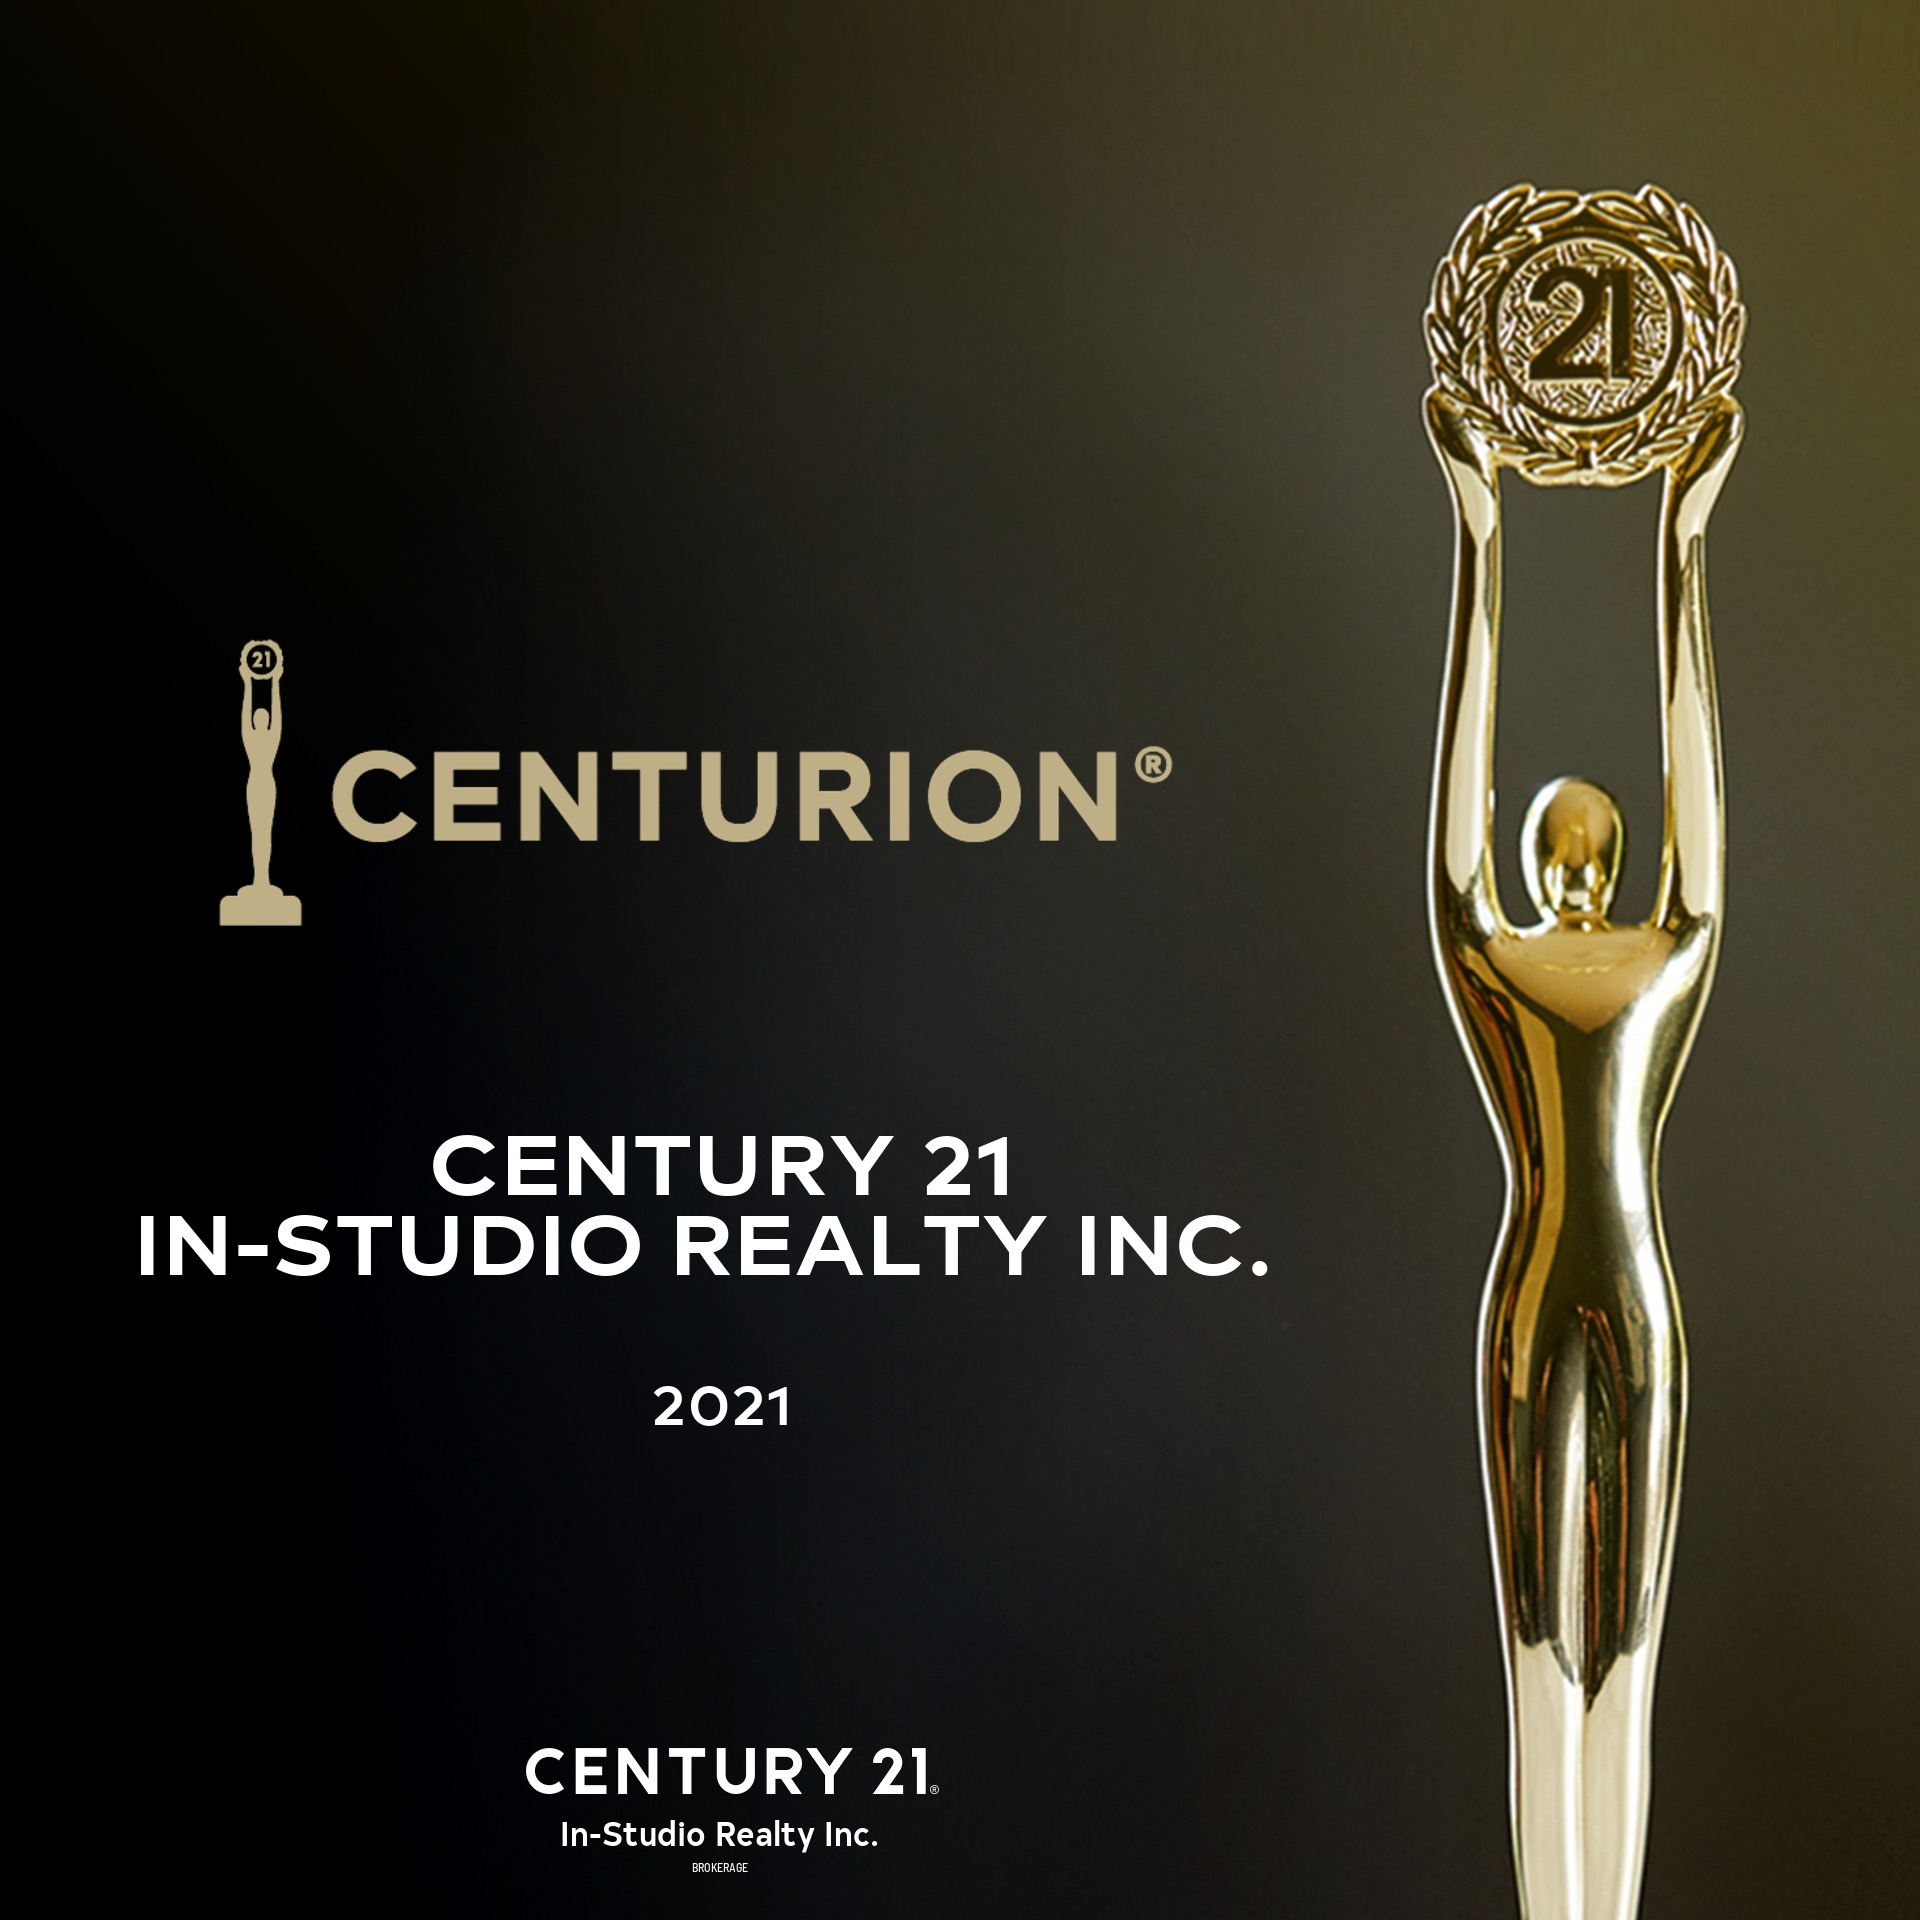 Centurion - Century 21 In-Studio Realty